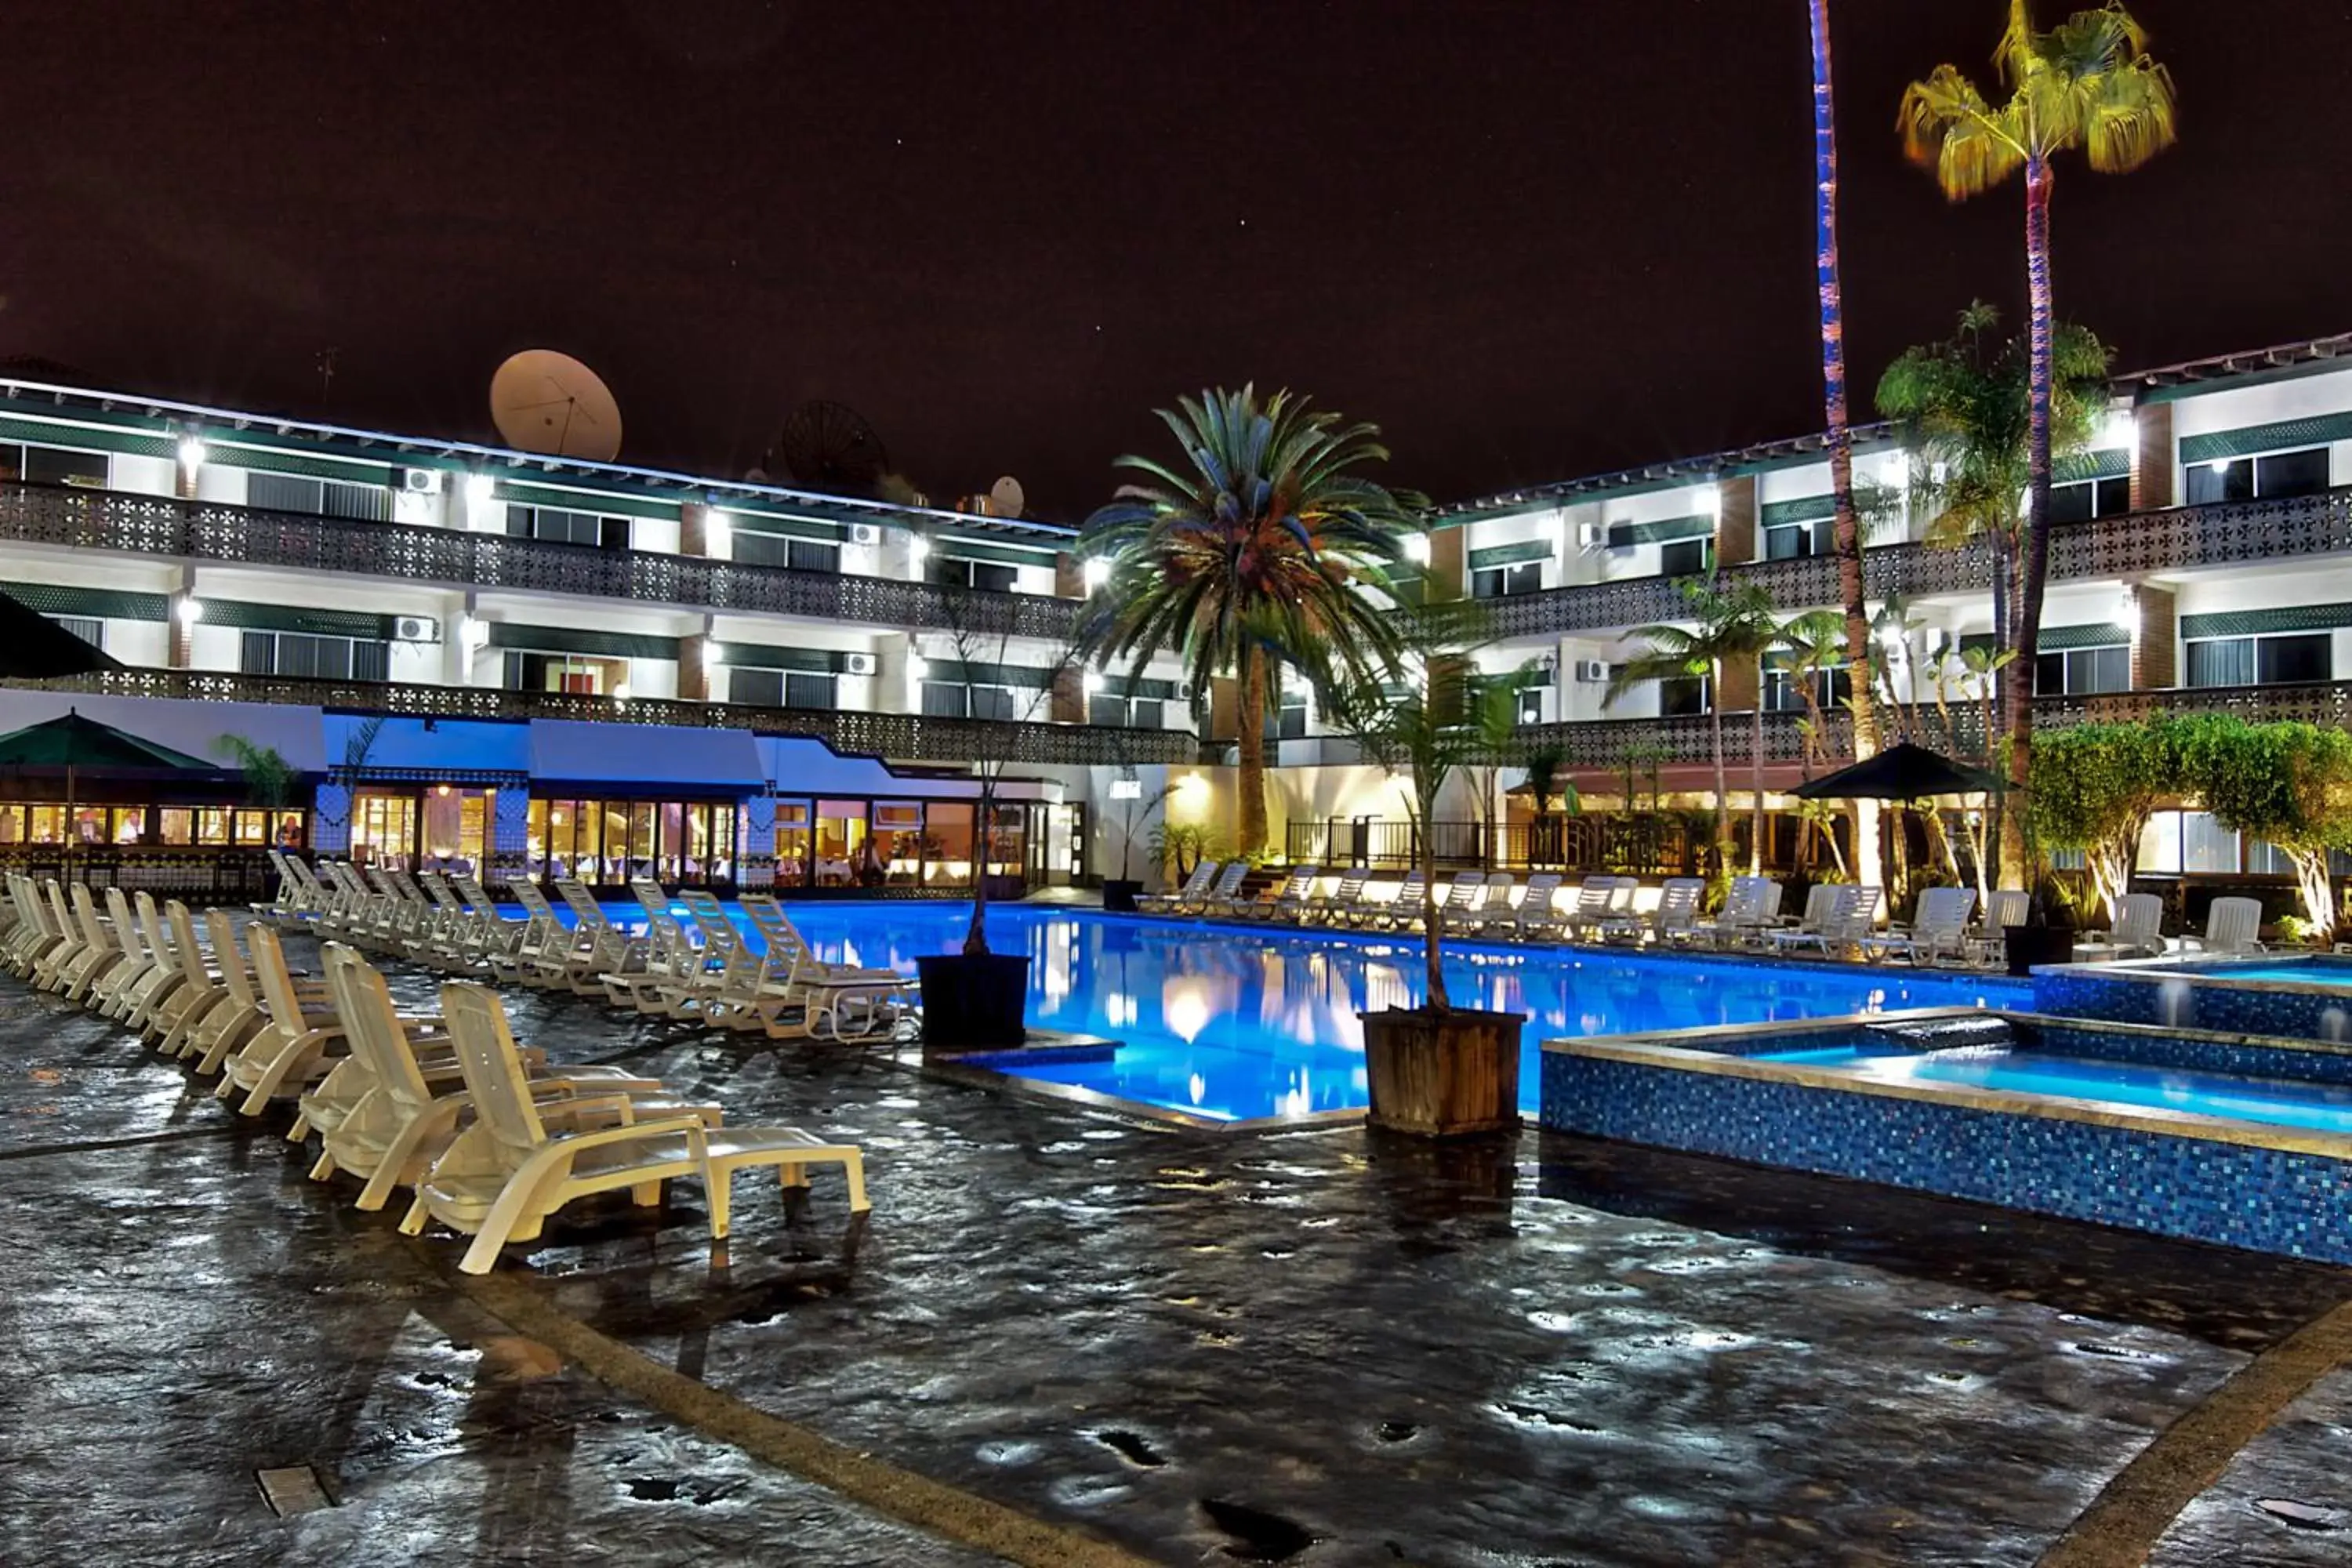 Swimming Pool in San Nicolas Hotel Casino